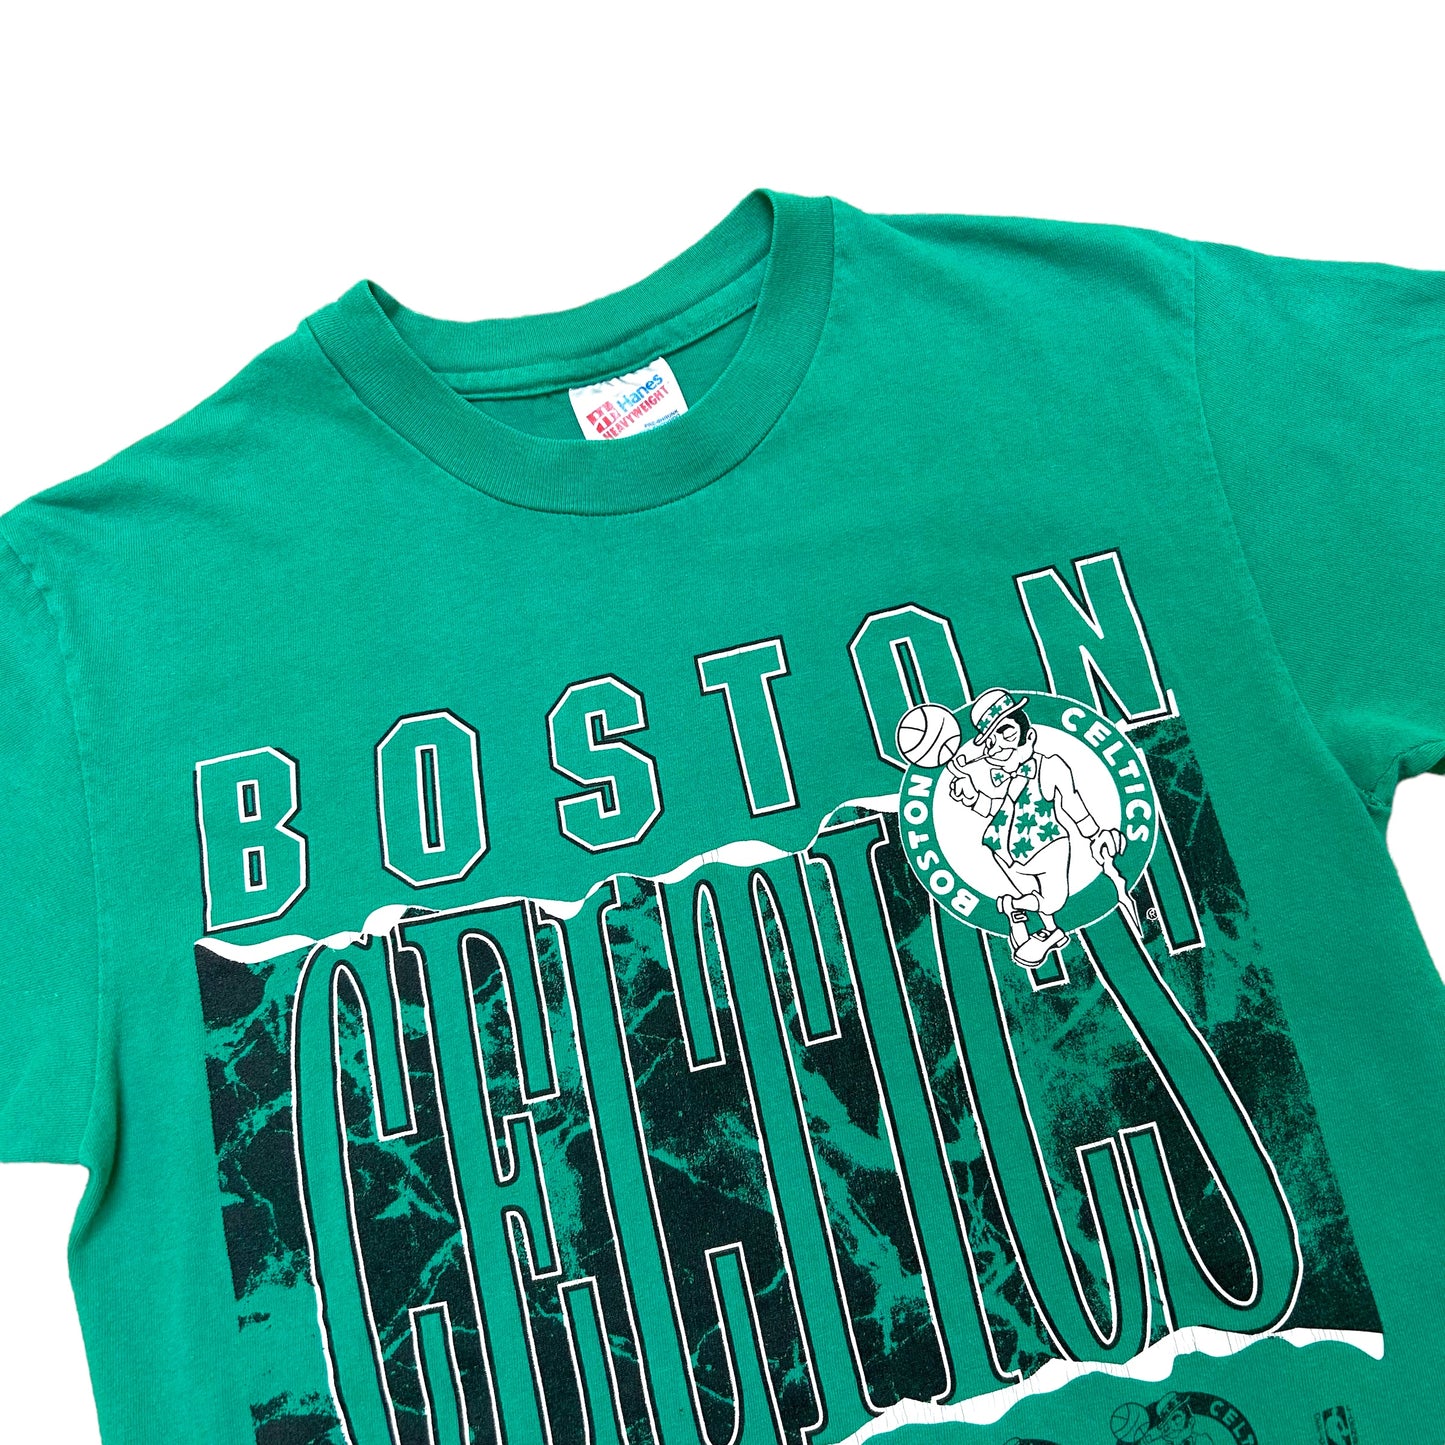 Vintage 1990s Boston Celtics Green Graphic T-Shirt - Size Medium